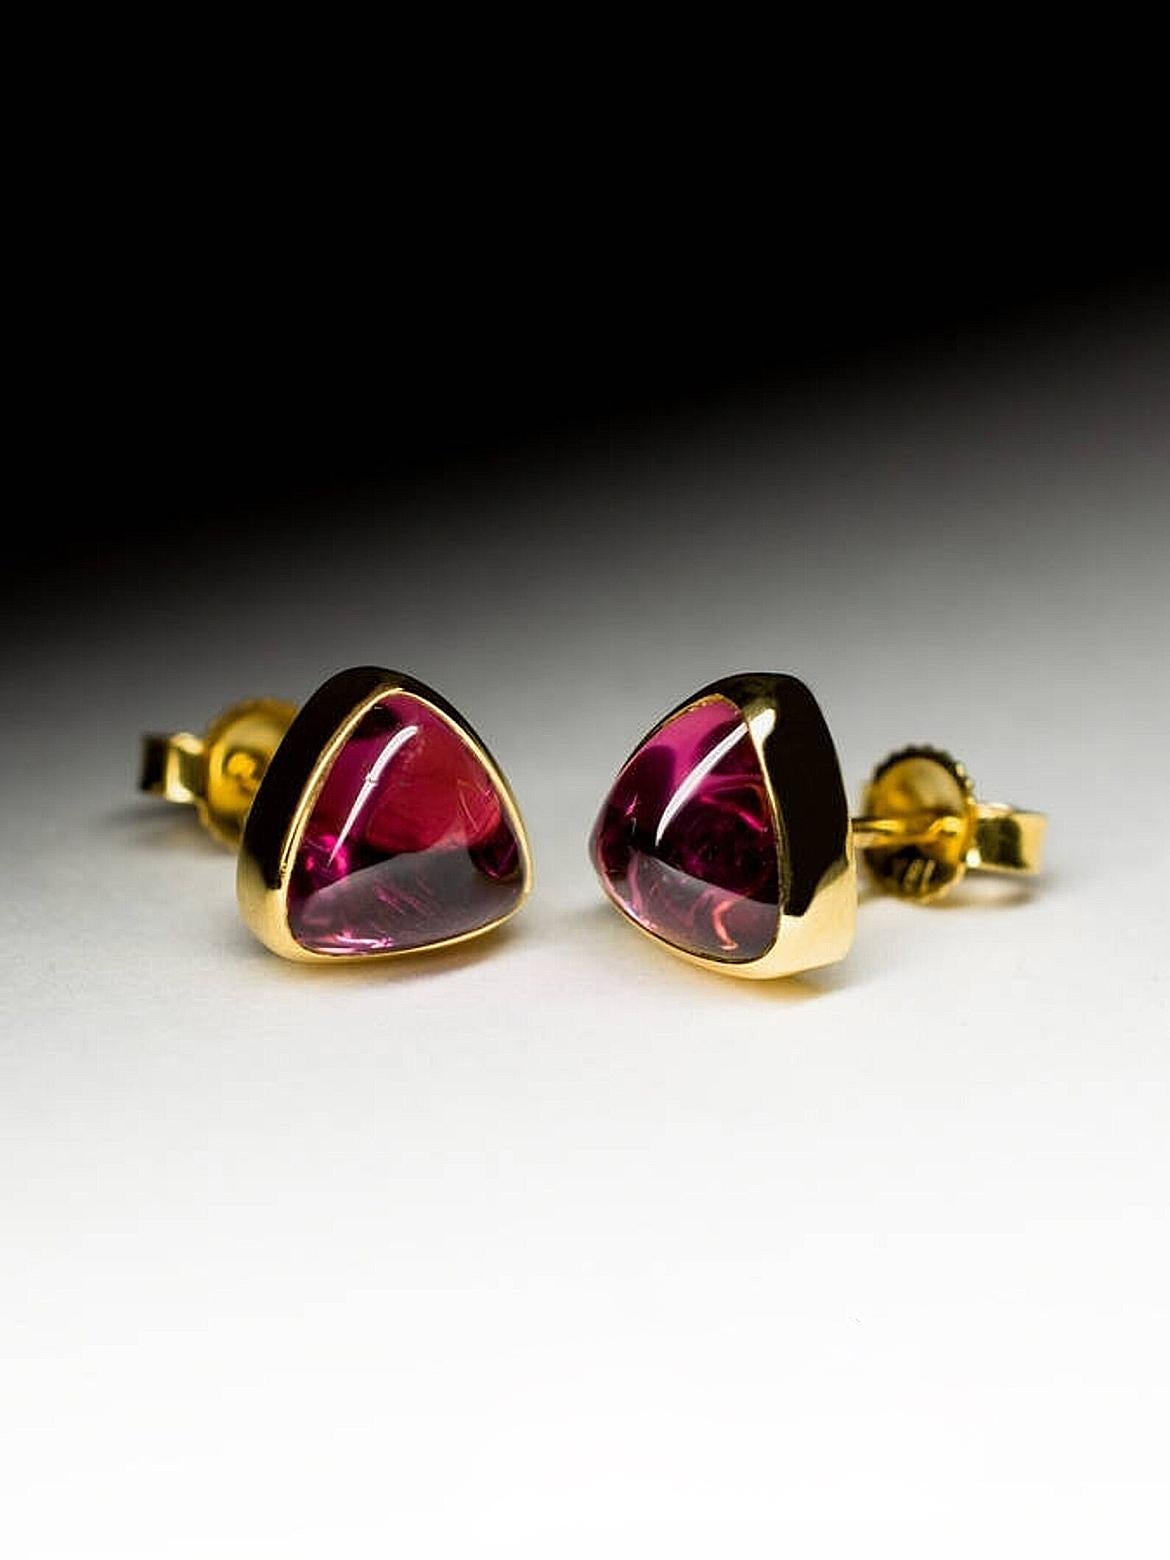 18K yellow gold stud earrings with natural Rubellite Pink Tourmaline
rubellite origin - Brazil
stone measurements - 0.2 х 0.28 х 0.28 in / 5 х 7 х 7 mm
earrings weight  - 2.17 grams

Minimal collection